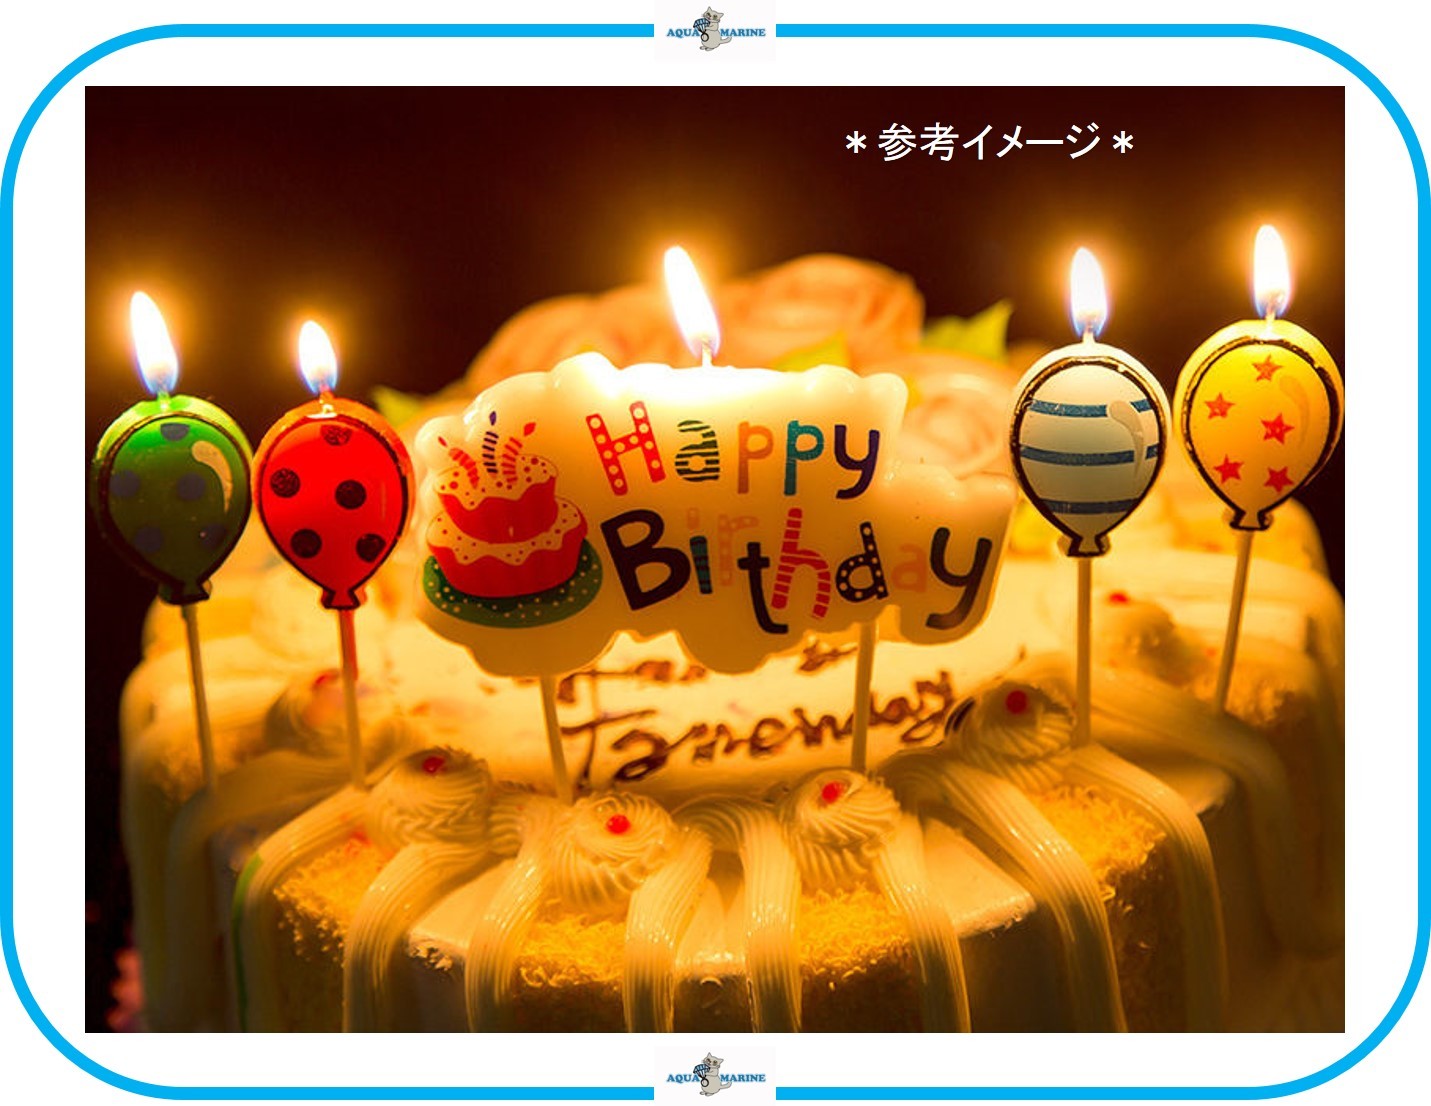 E231 Happybirthday キャンドル ロウソク バースデー ケーキ デコレーション 海外 オシャレ デザイン 誕生日 パーティー お祝い キッズ Onlineshop Aquamarine